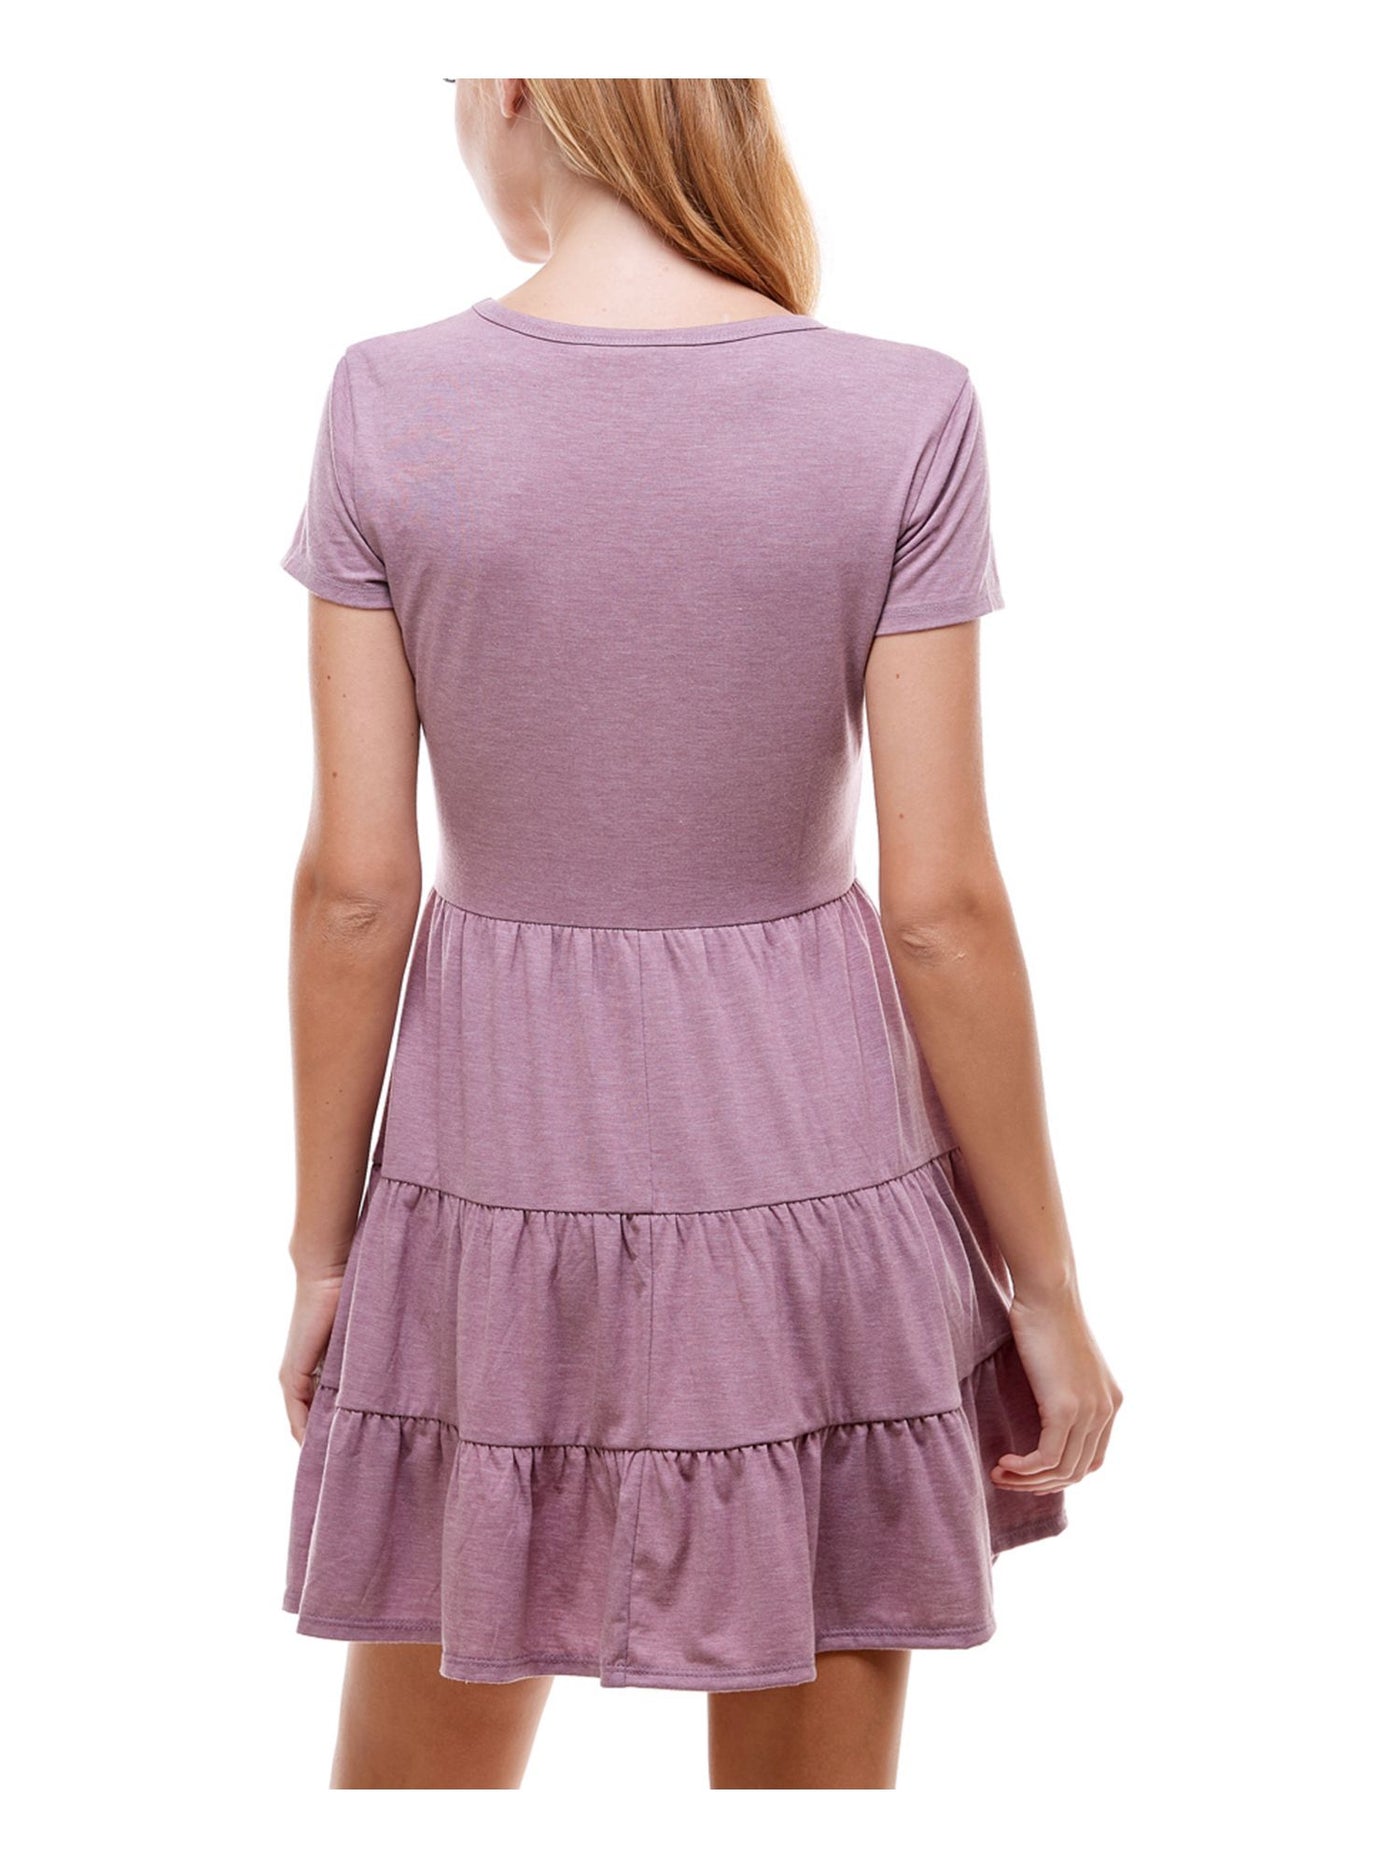 BEBOP Womens Purple Short Sleeve Crew Neck Short Fit + Flare Dress Juniors S